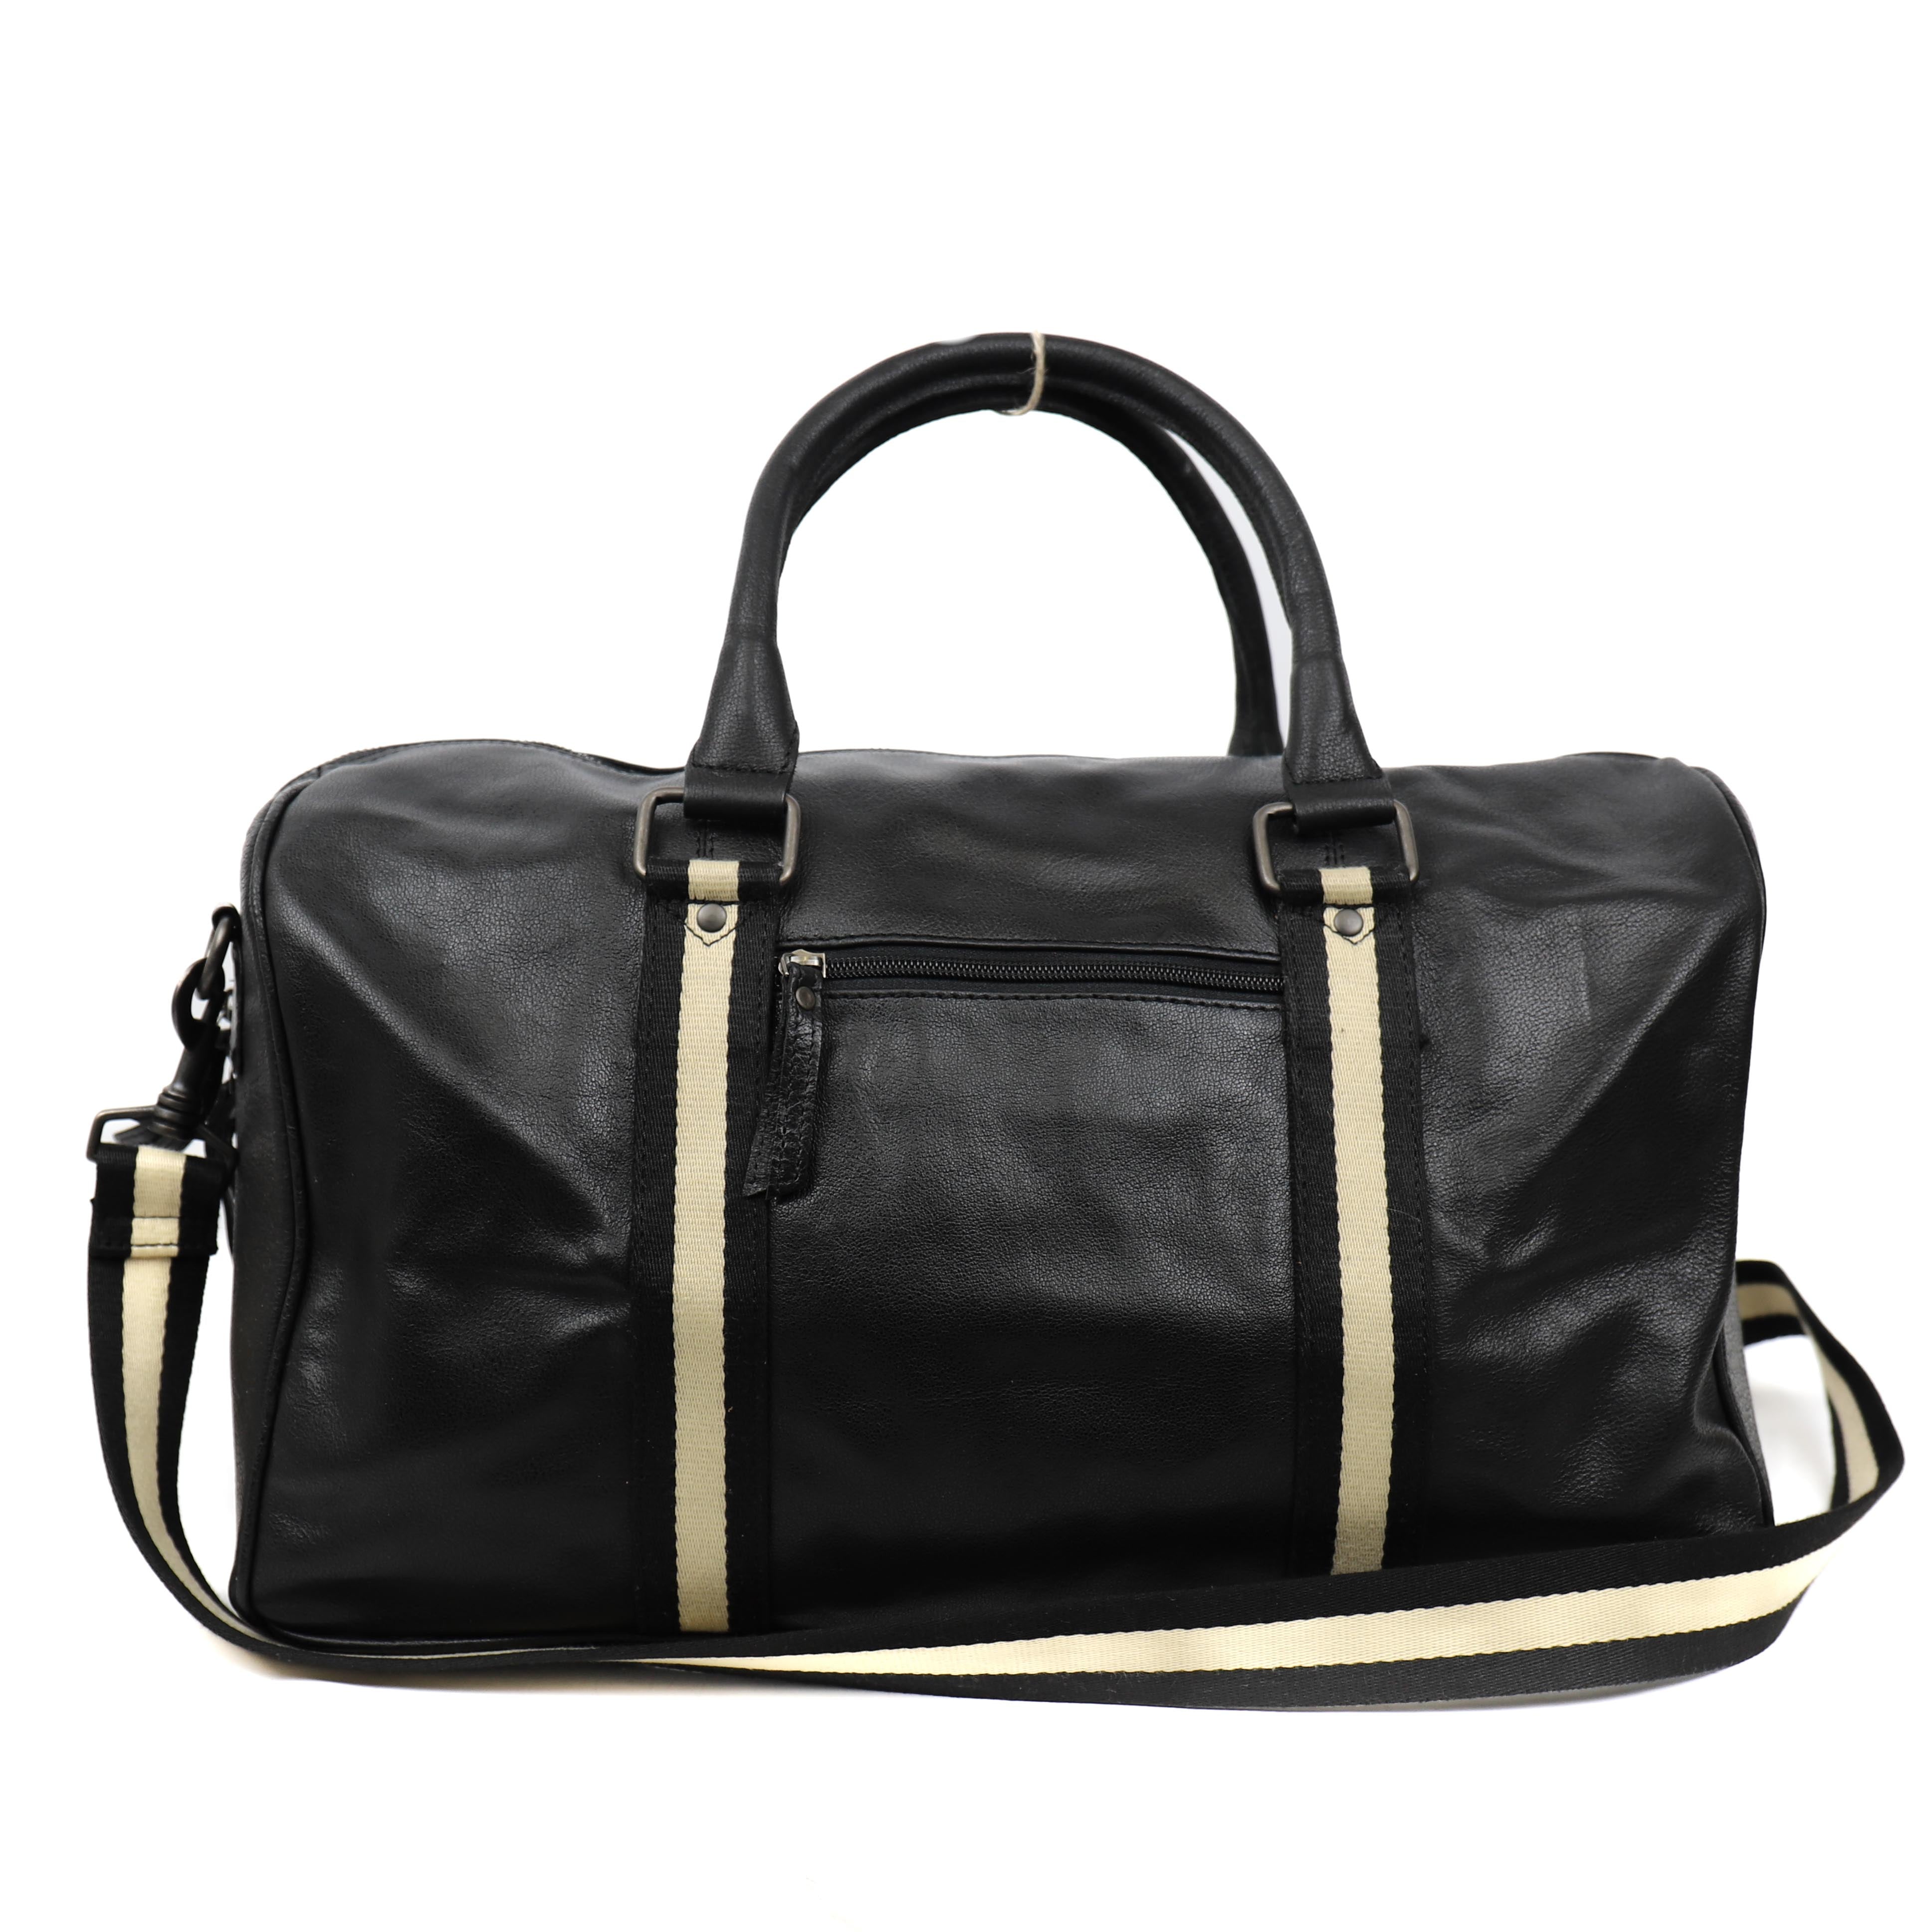 Weekend bag 'Jelmer' black/stripe